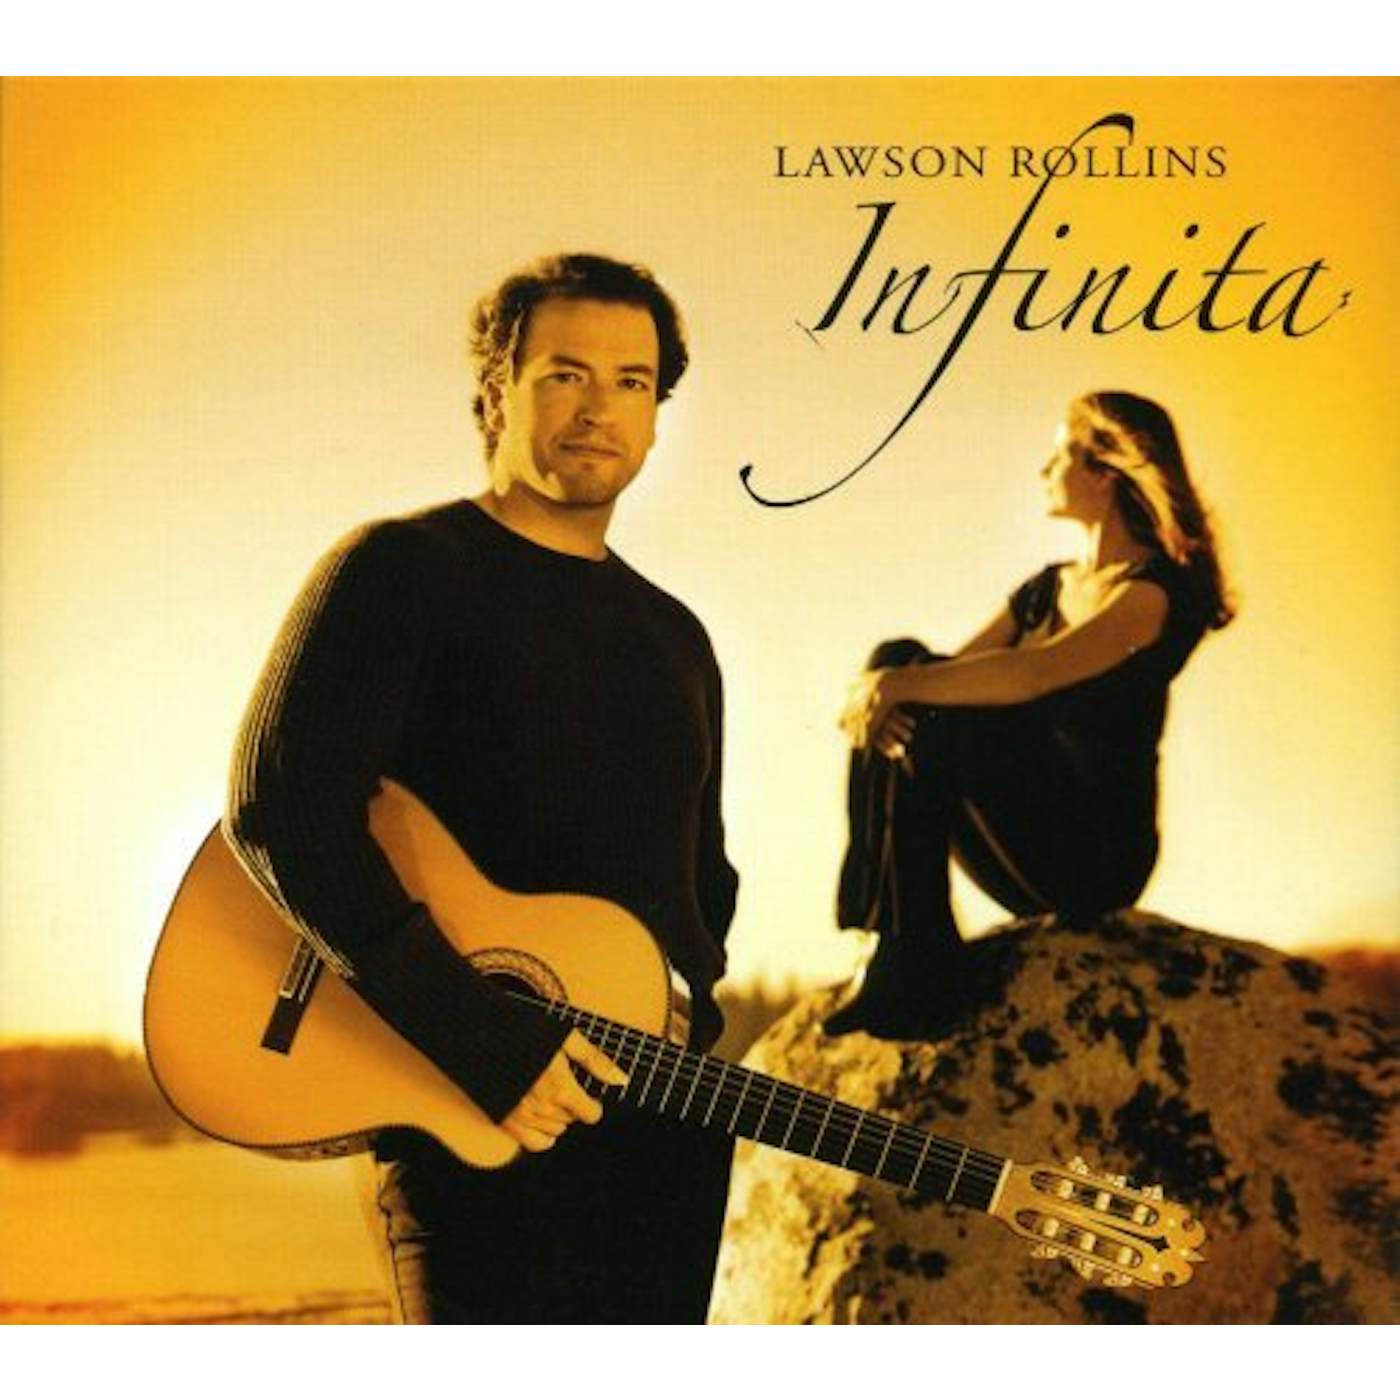 Lawson Rollins INFINITA CD